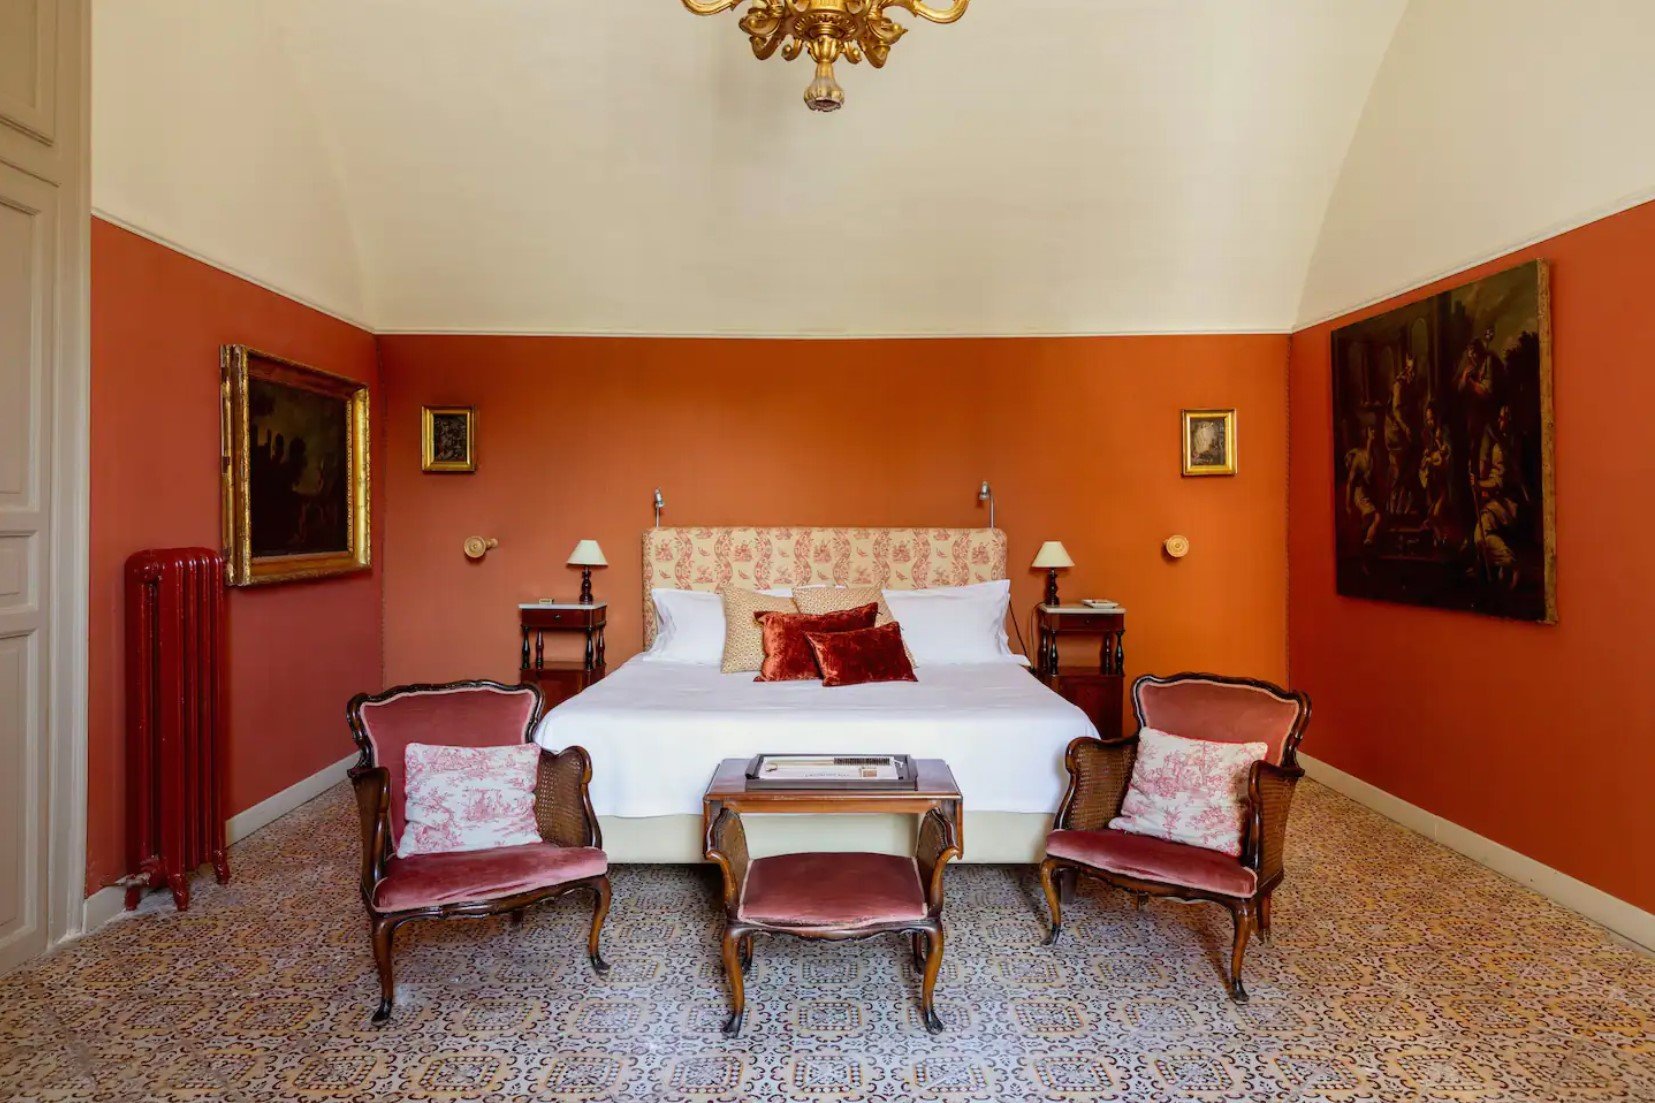 villa tasca orange bedroom.jpg